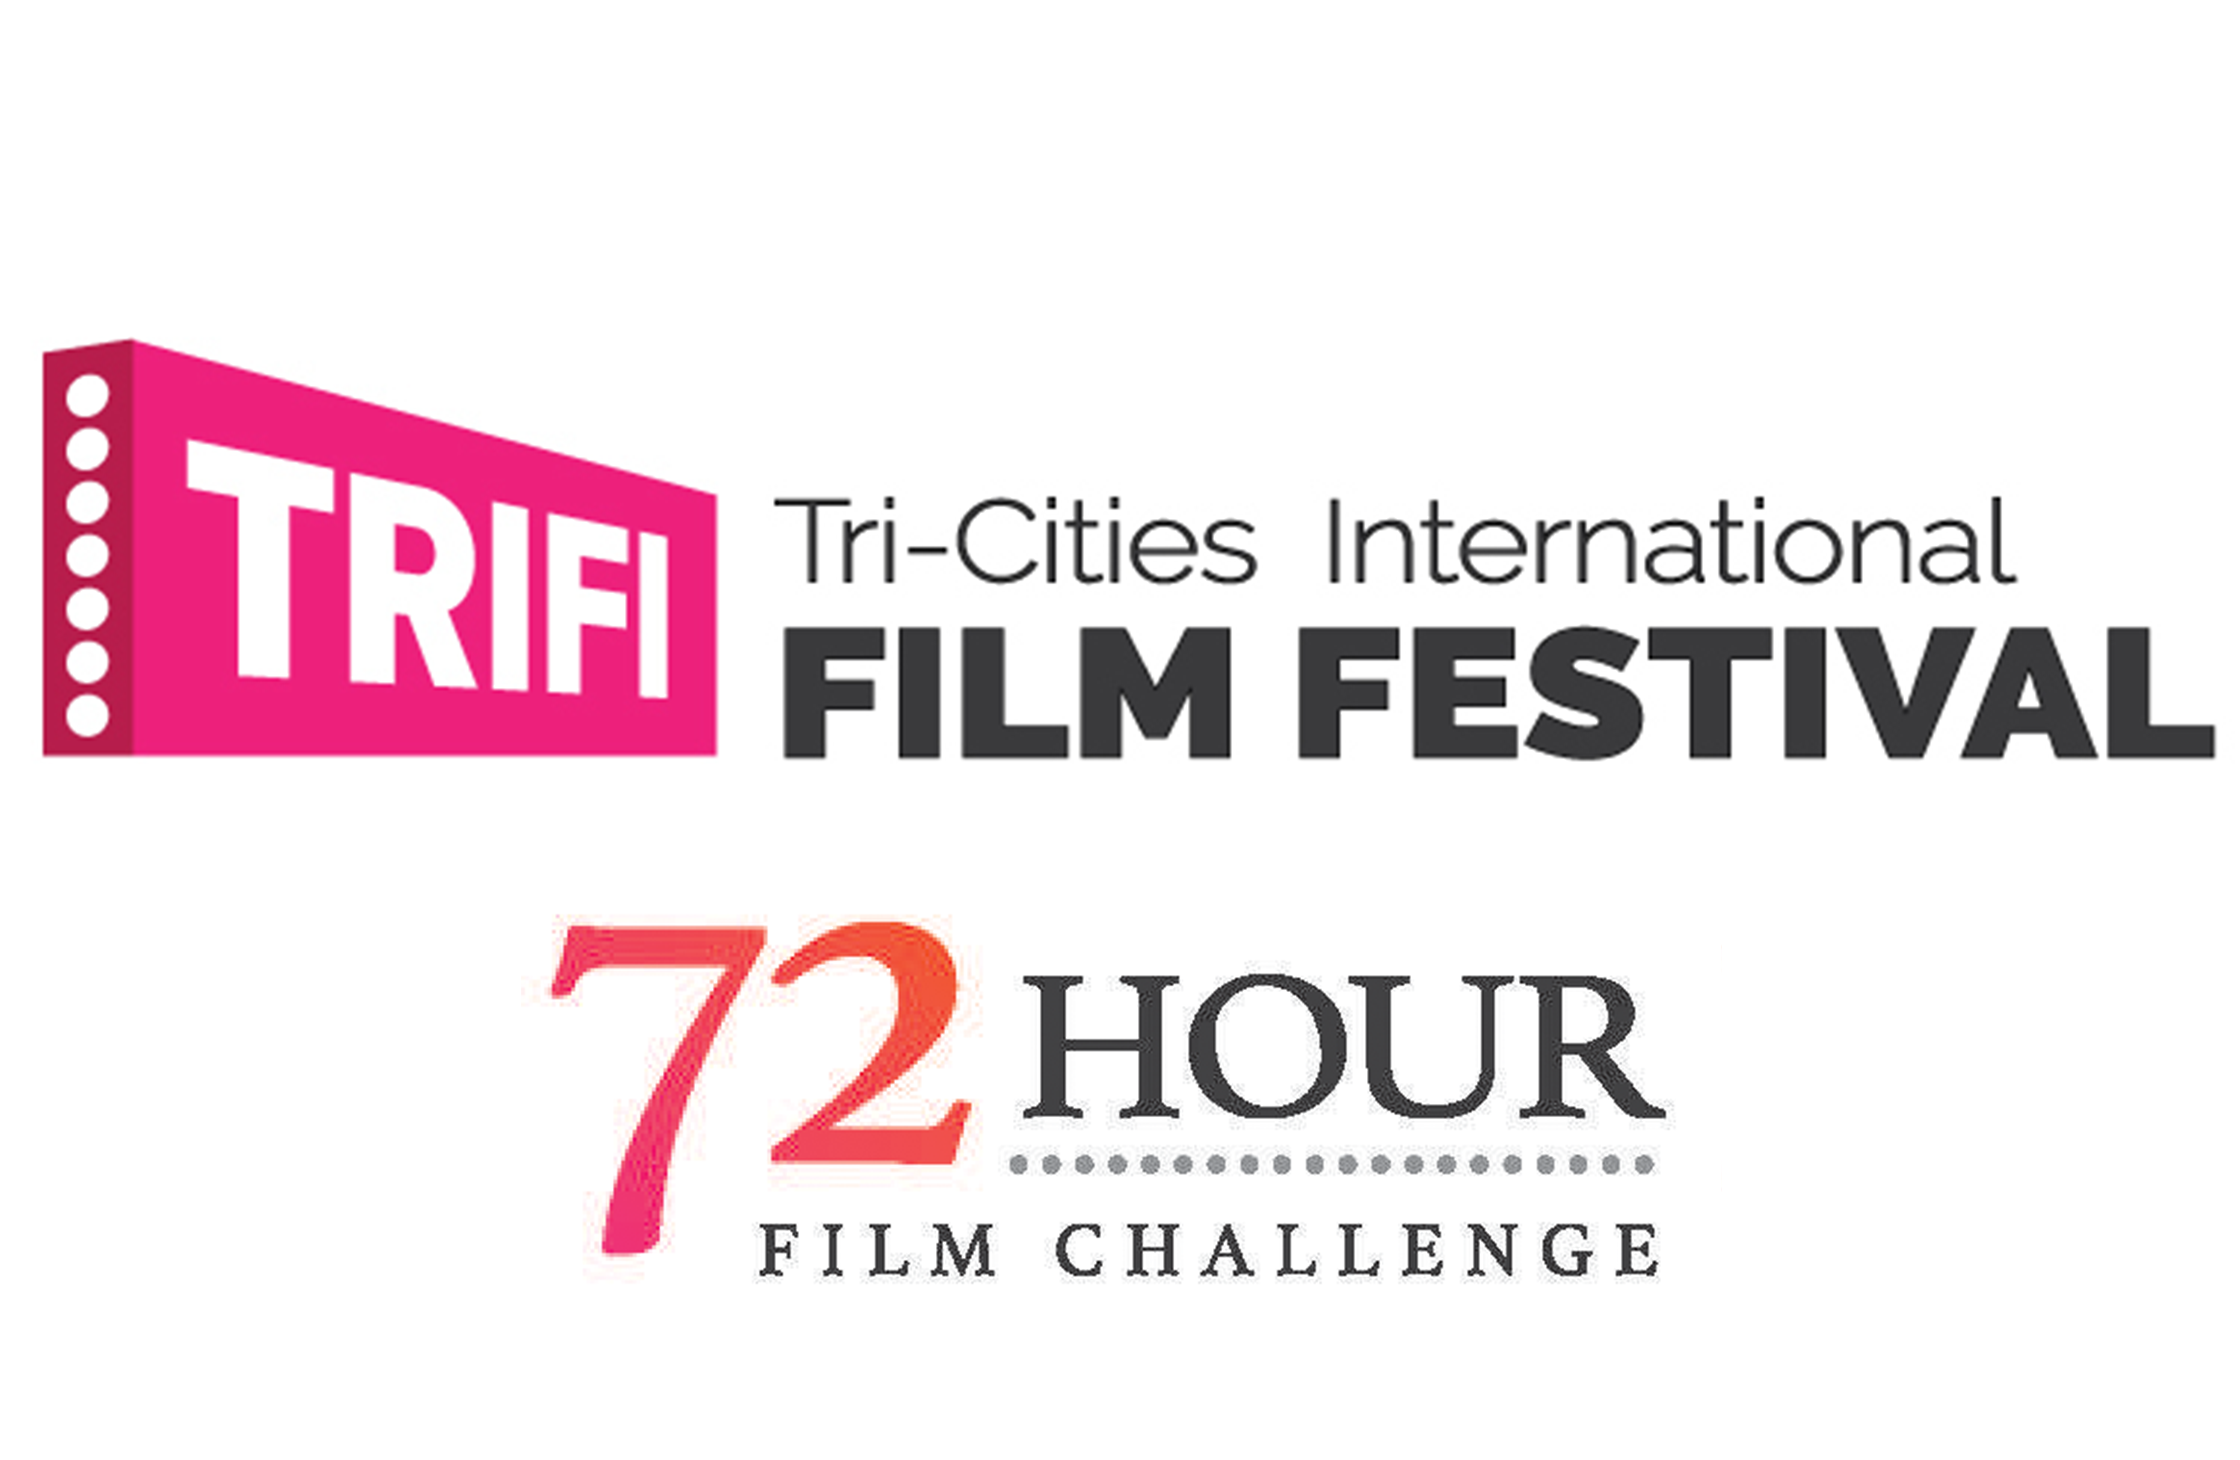 TRIFI Film Festival 2023